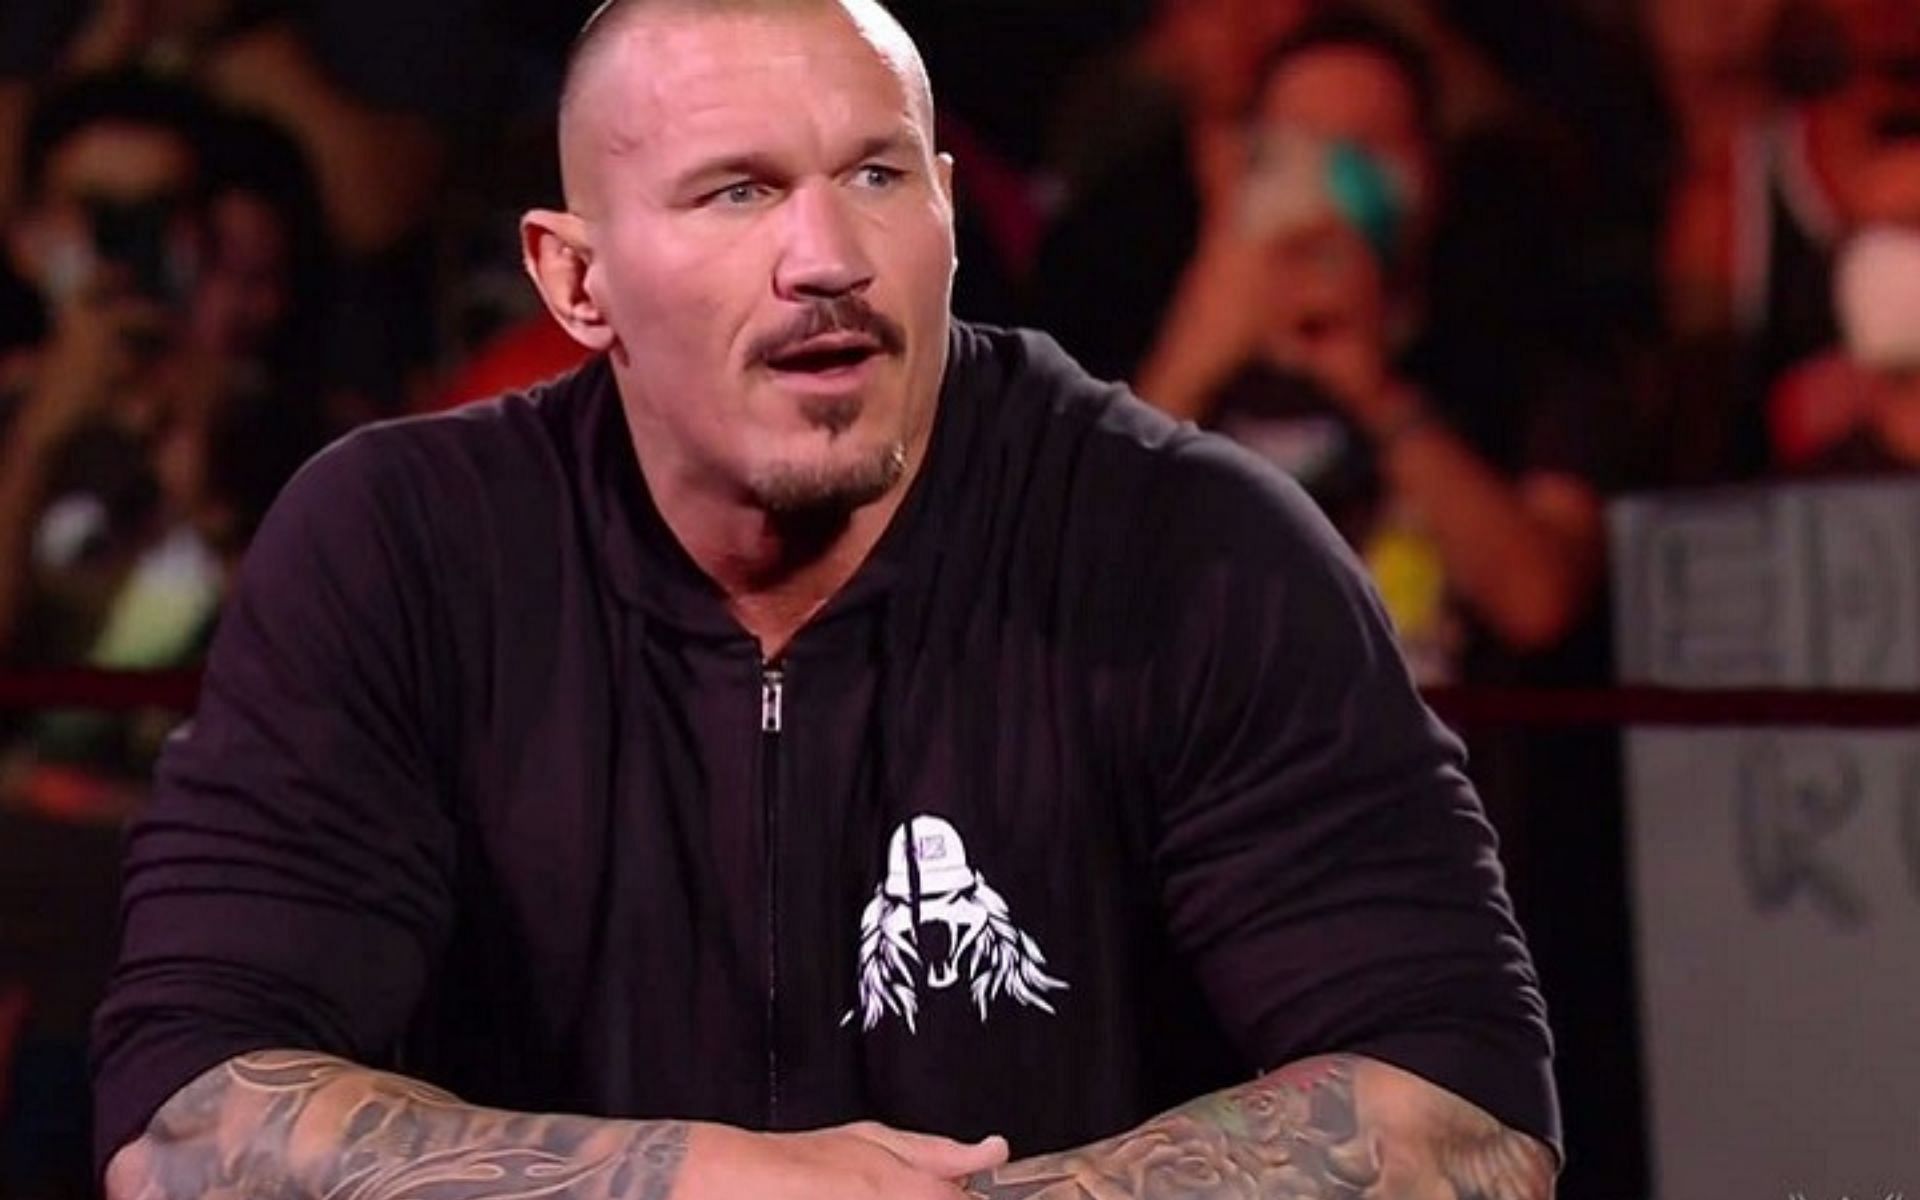 Randy Orton is currently nursing a back injury